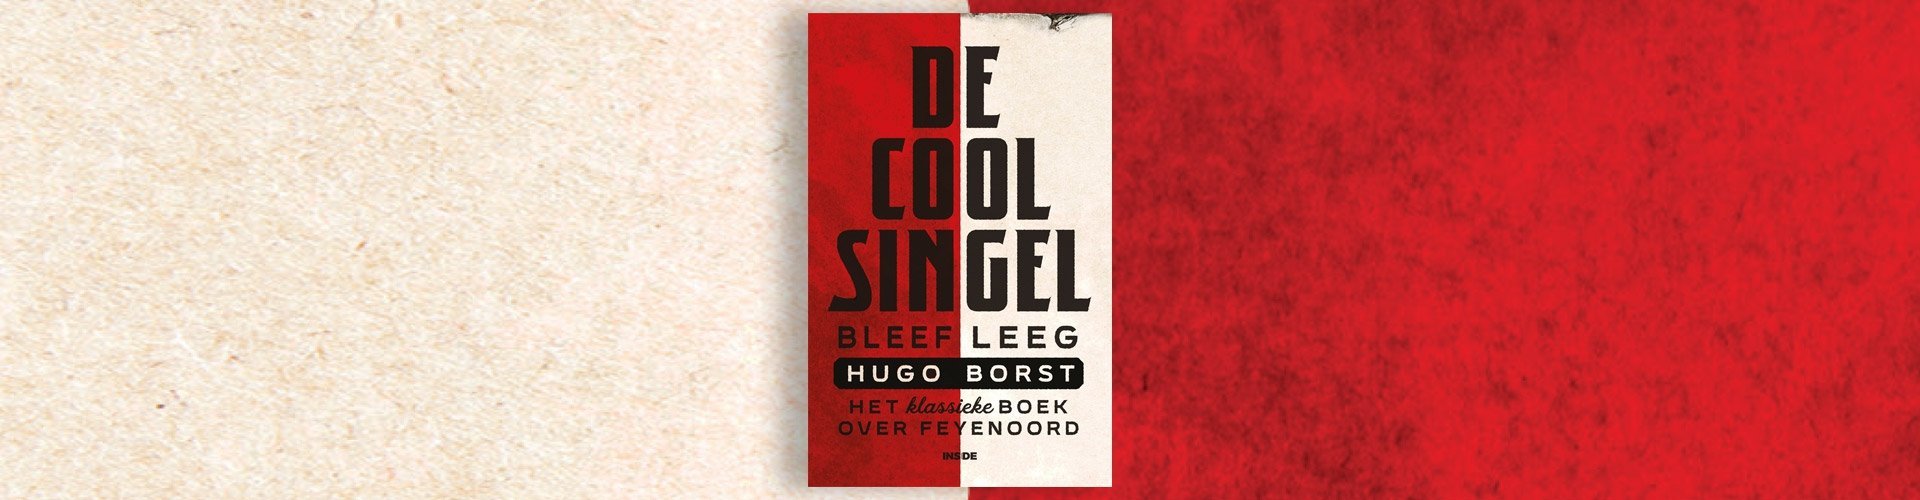 : Hugo Borst -  De Coolsingel bleef leeg Hugo Borst -  De Coolsingel bleef leeg